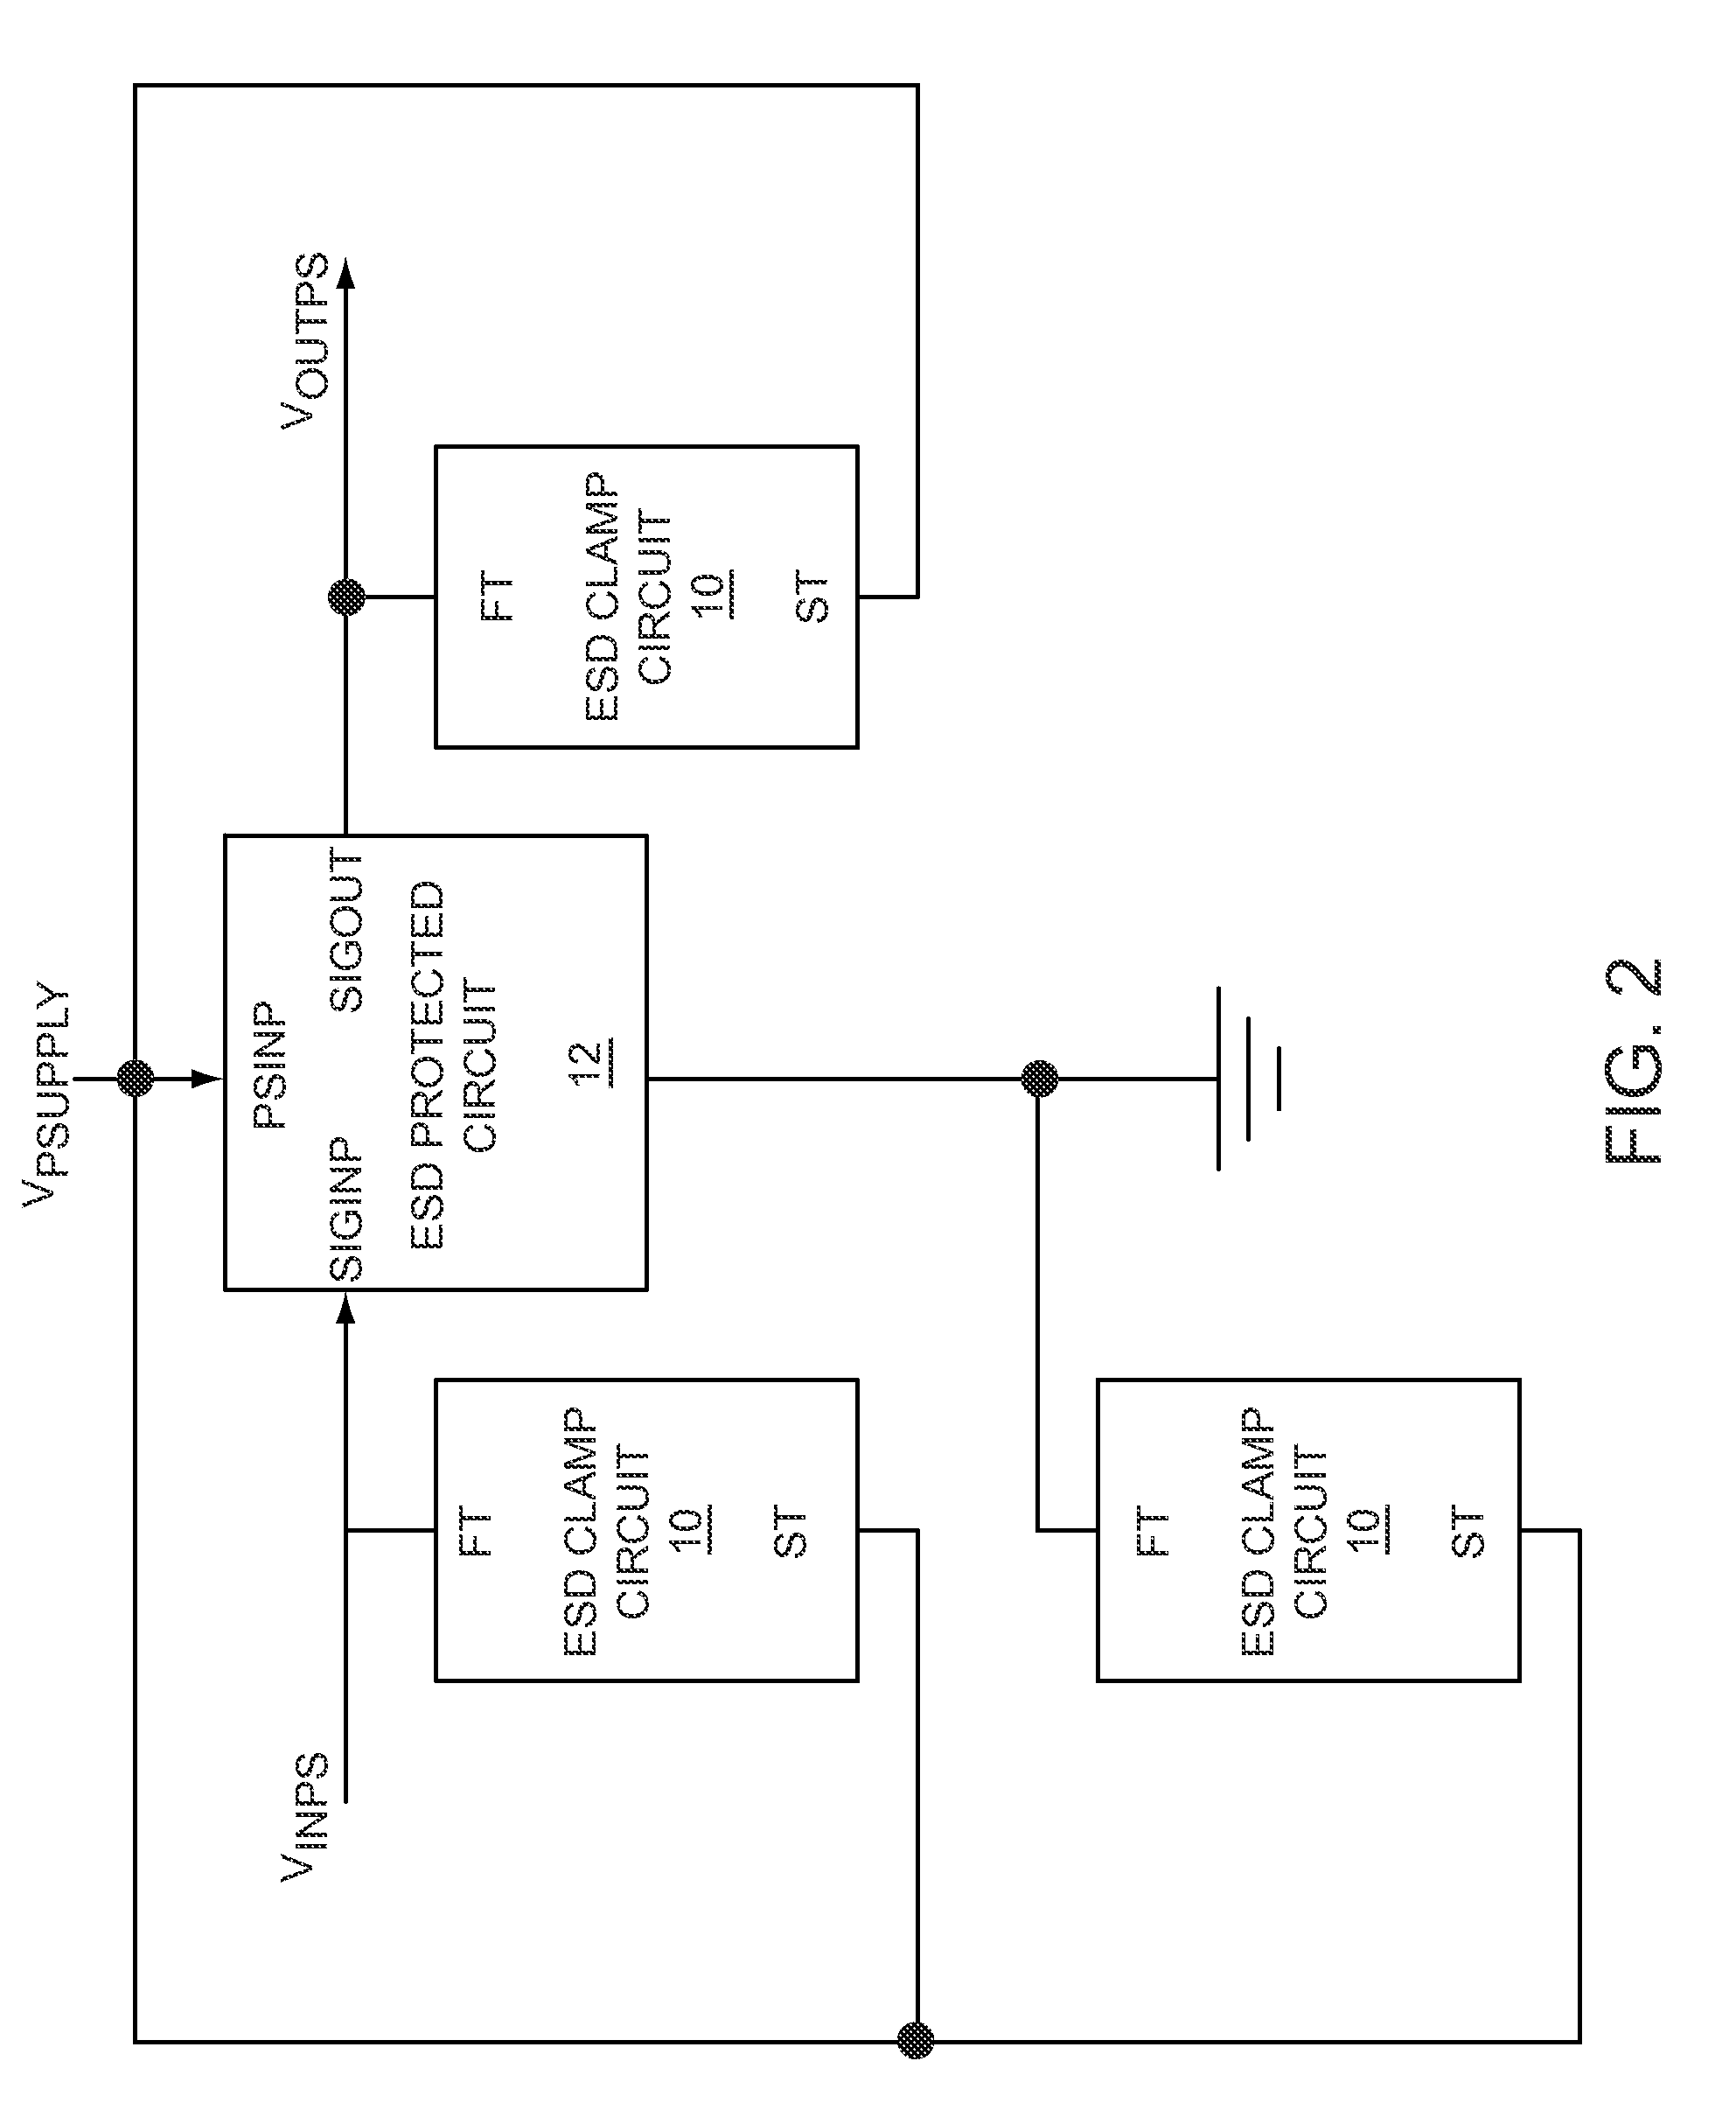 Depletion-mode field effect transistor based electrostatic discharge protection circuit